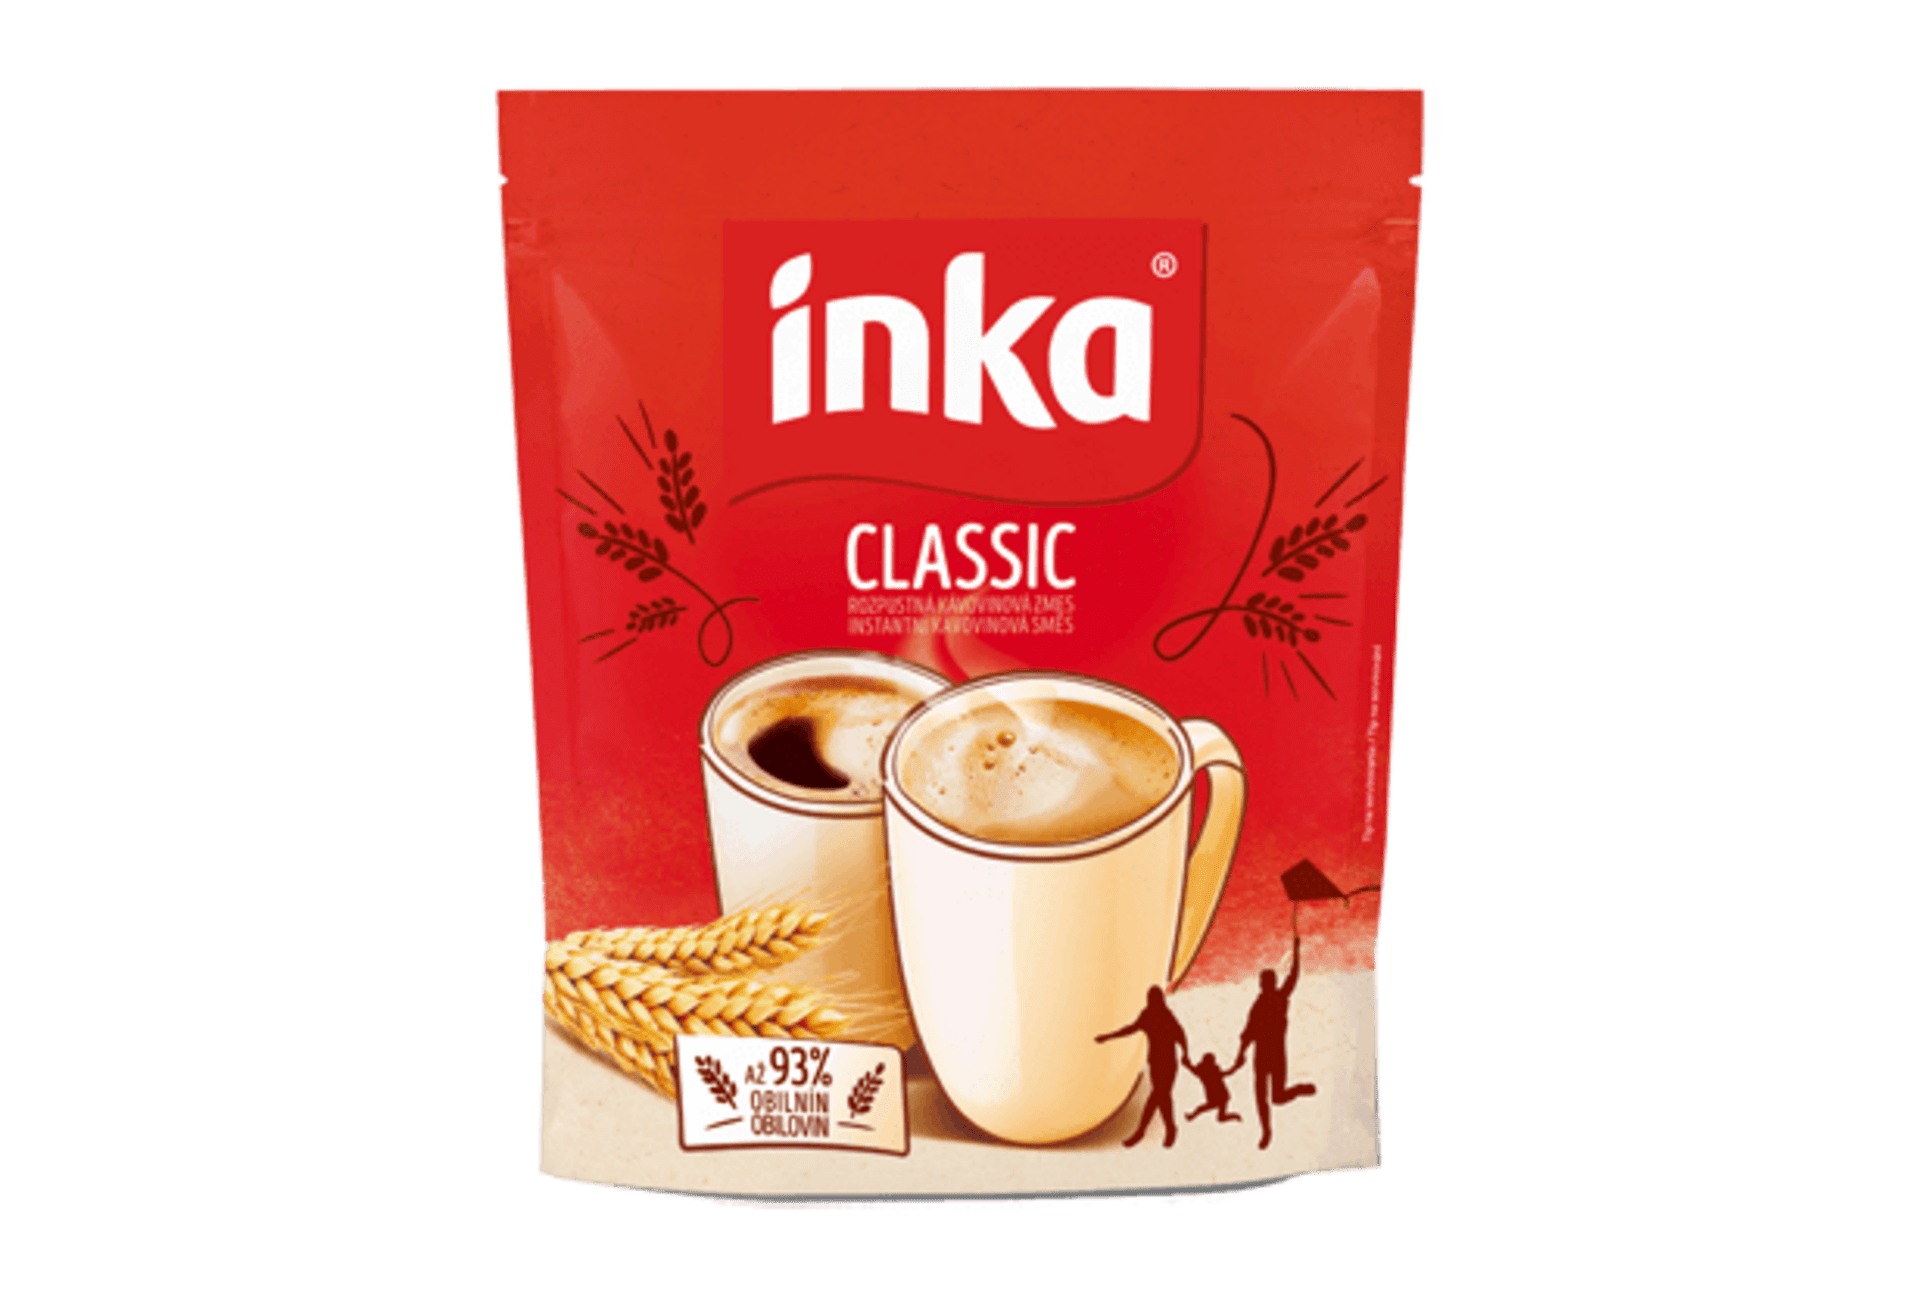 Inka Instantná bezkofeínová kávovina 180 g